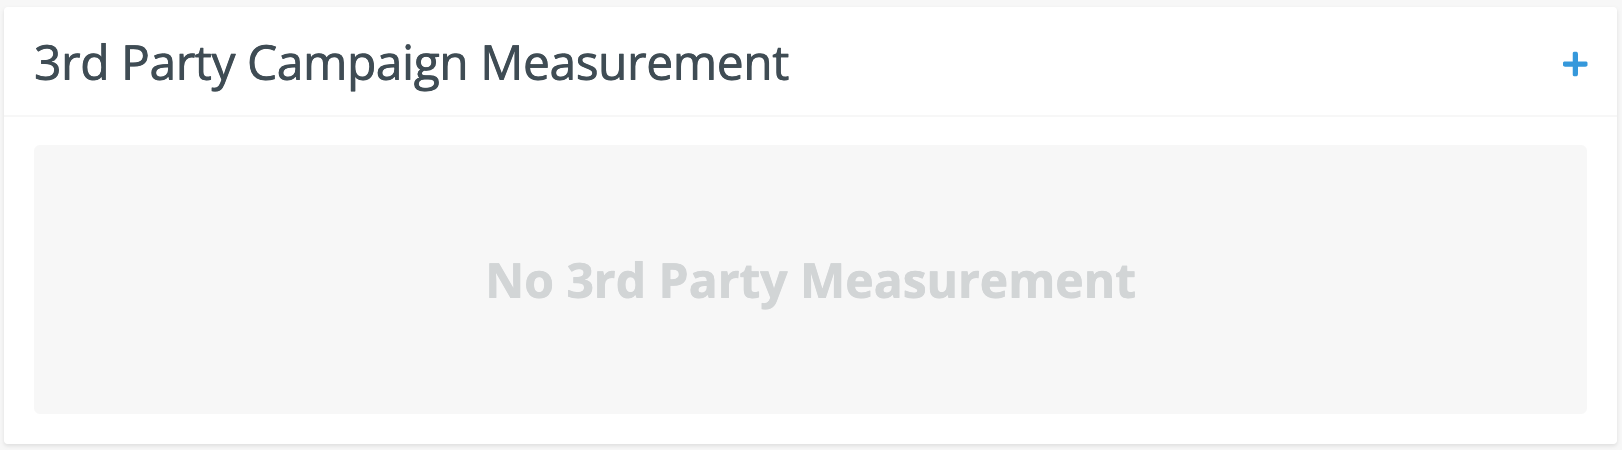 Blank_Measurement.png